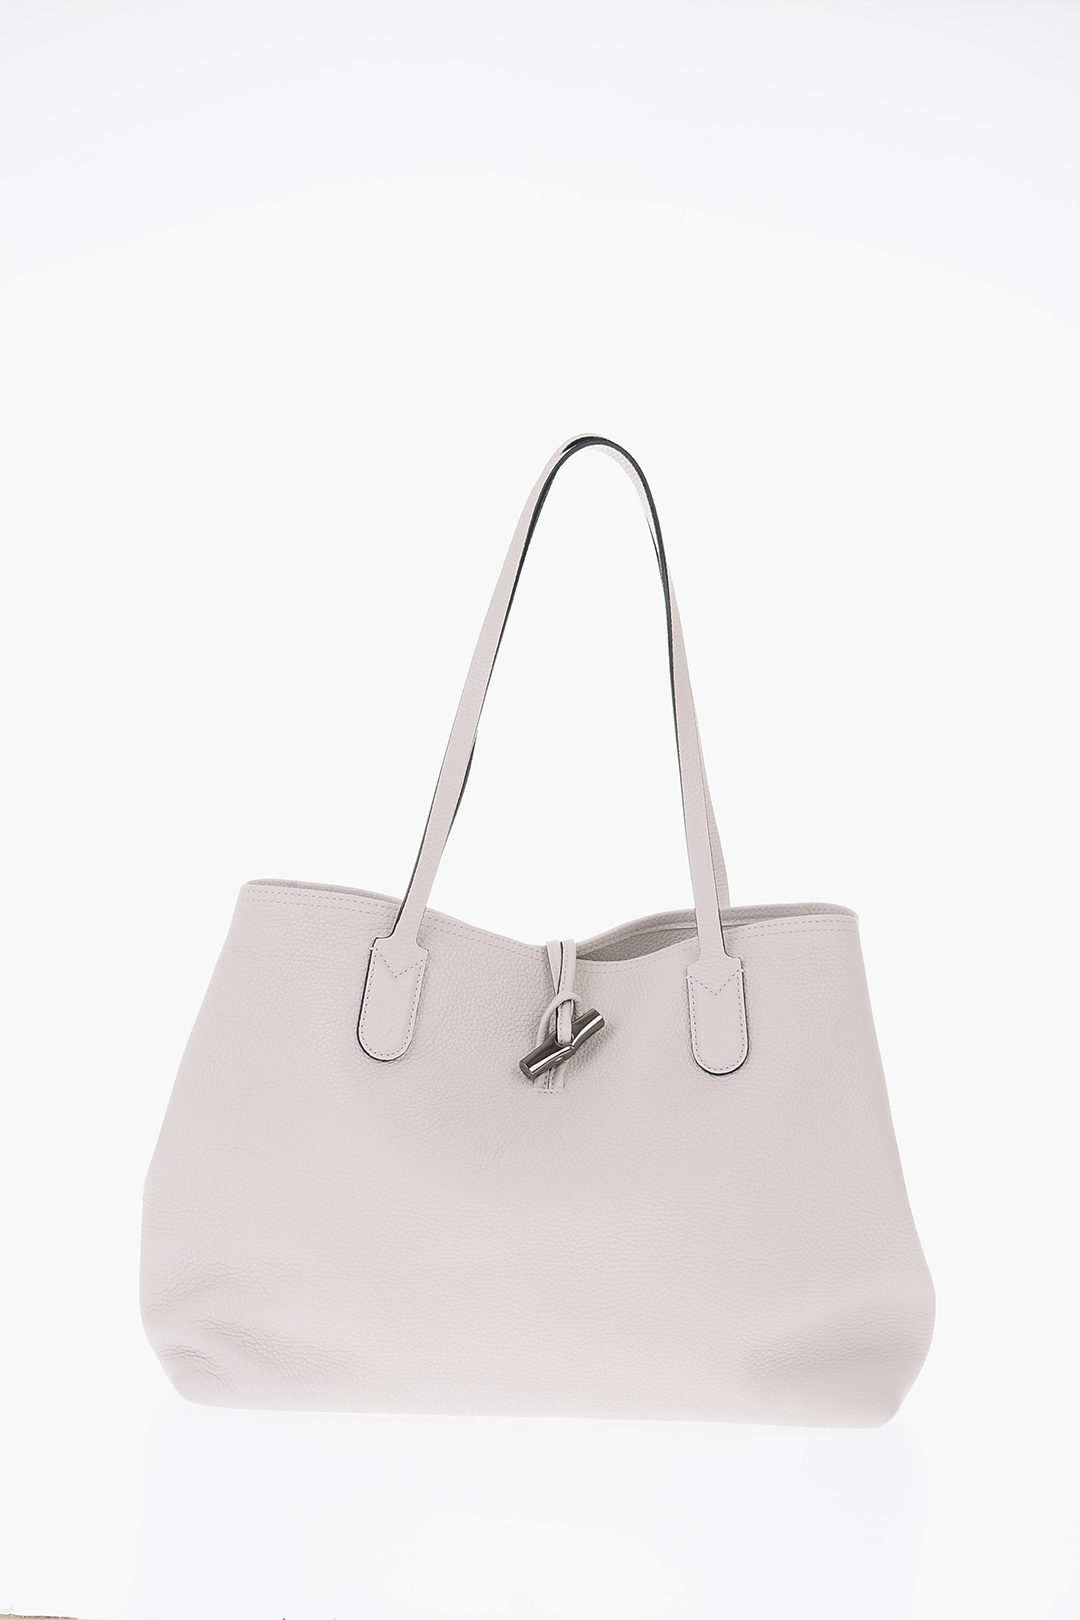 Longchamp Medium Leather Roseau Tote Bag